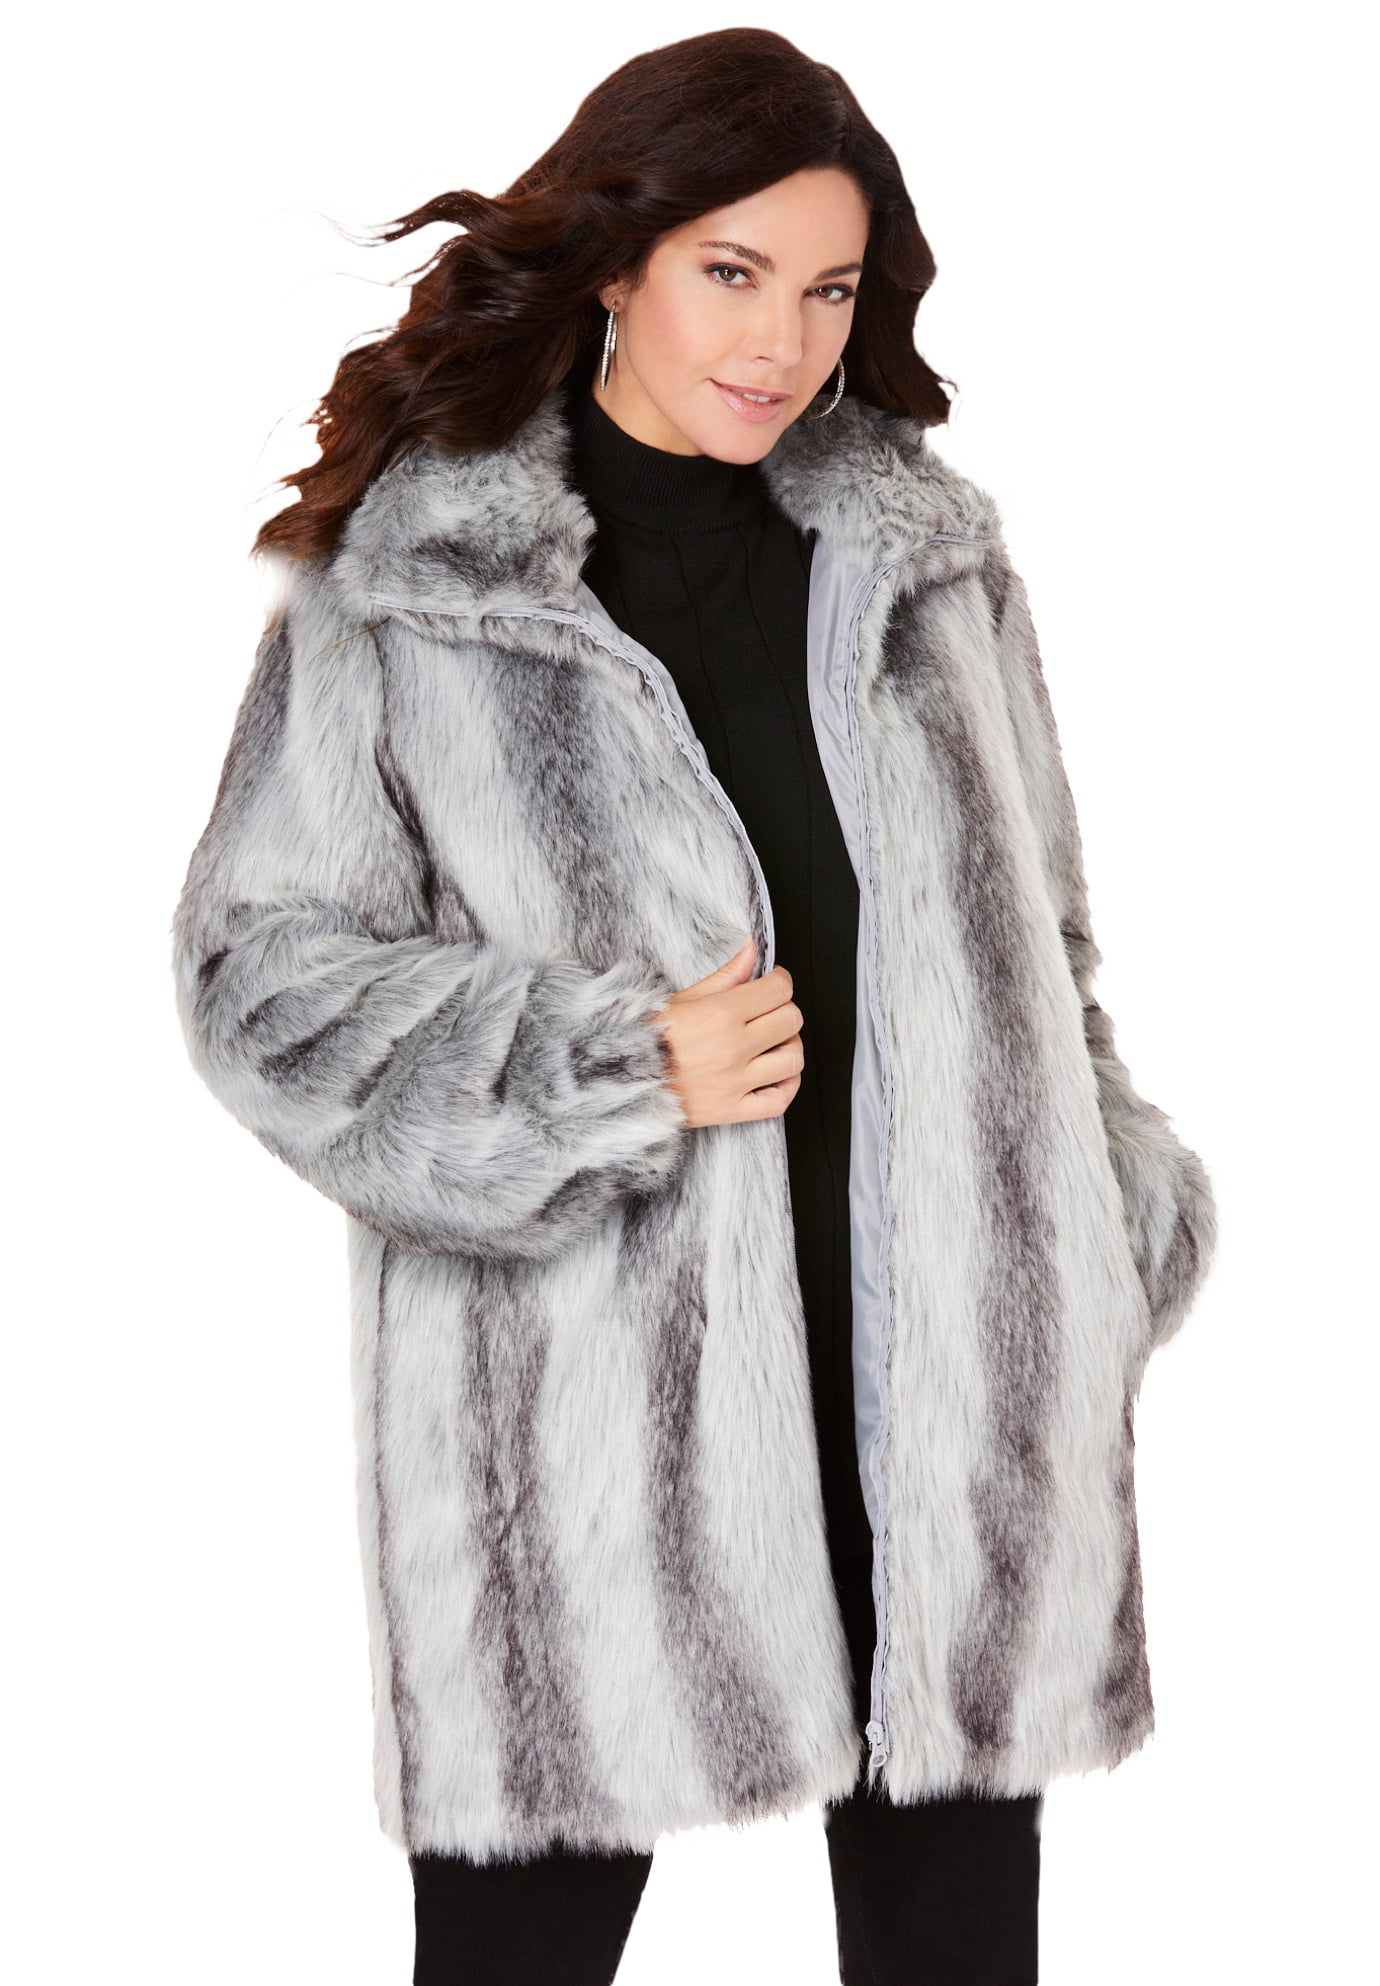 Coat Women Women Winter Faux Wool Coat Solid Jackets Fur Short Stitching Faux Fur Coat 